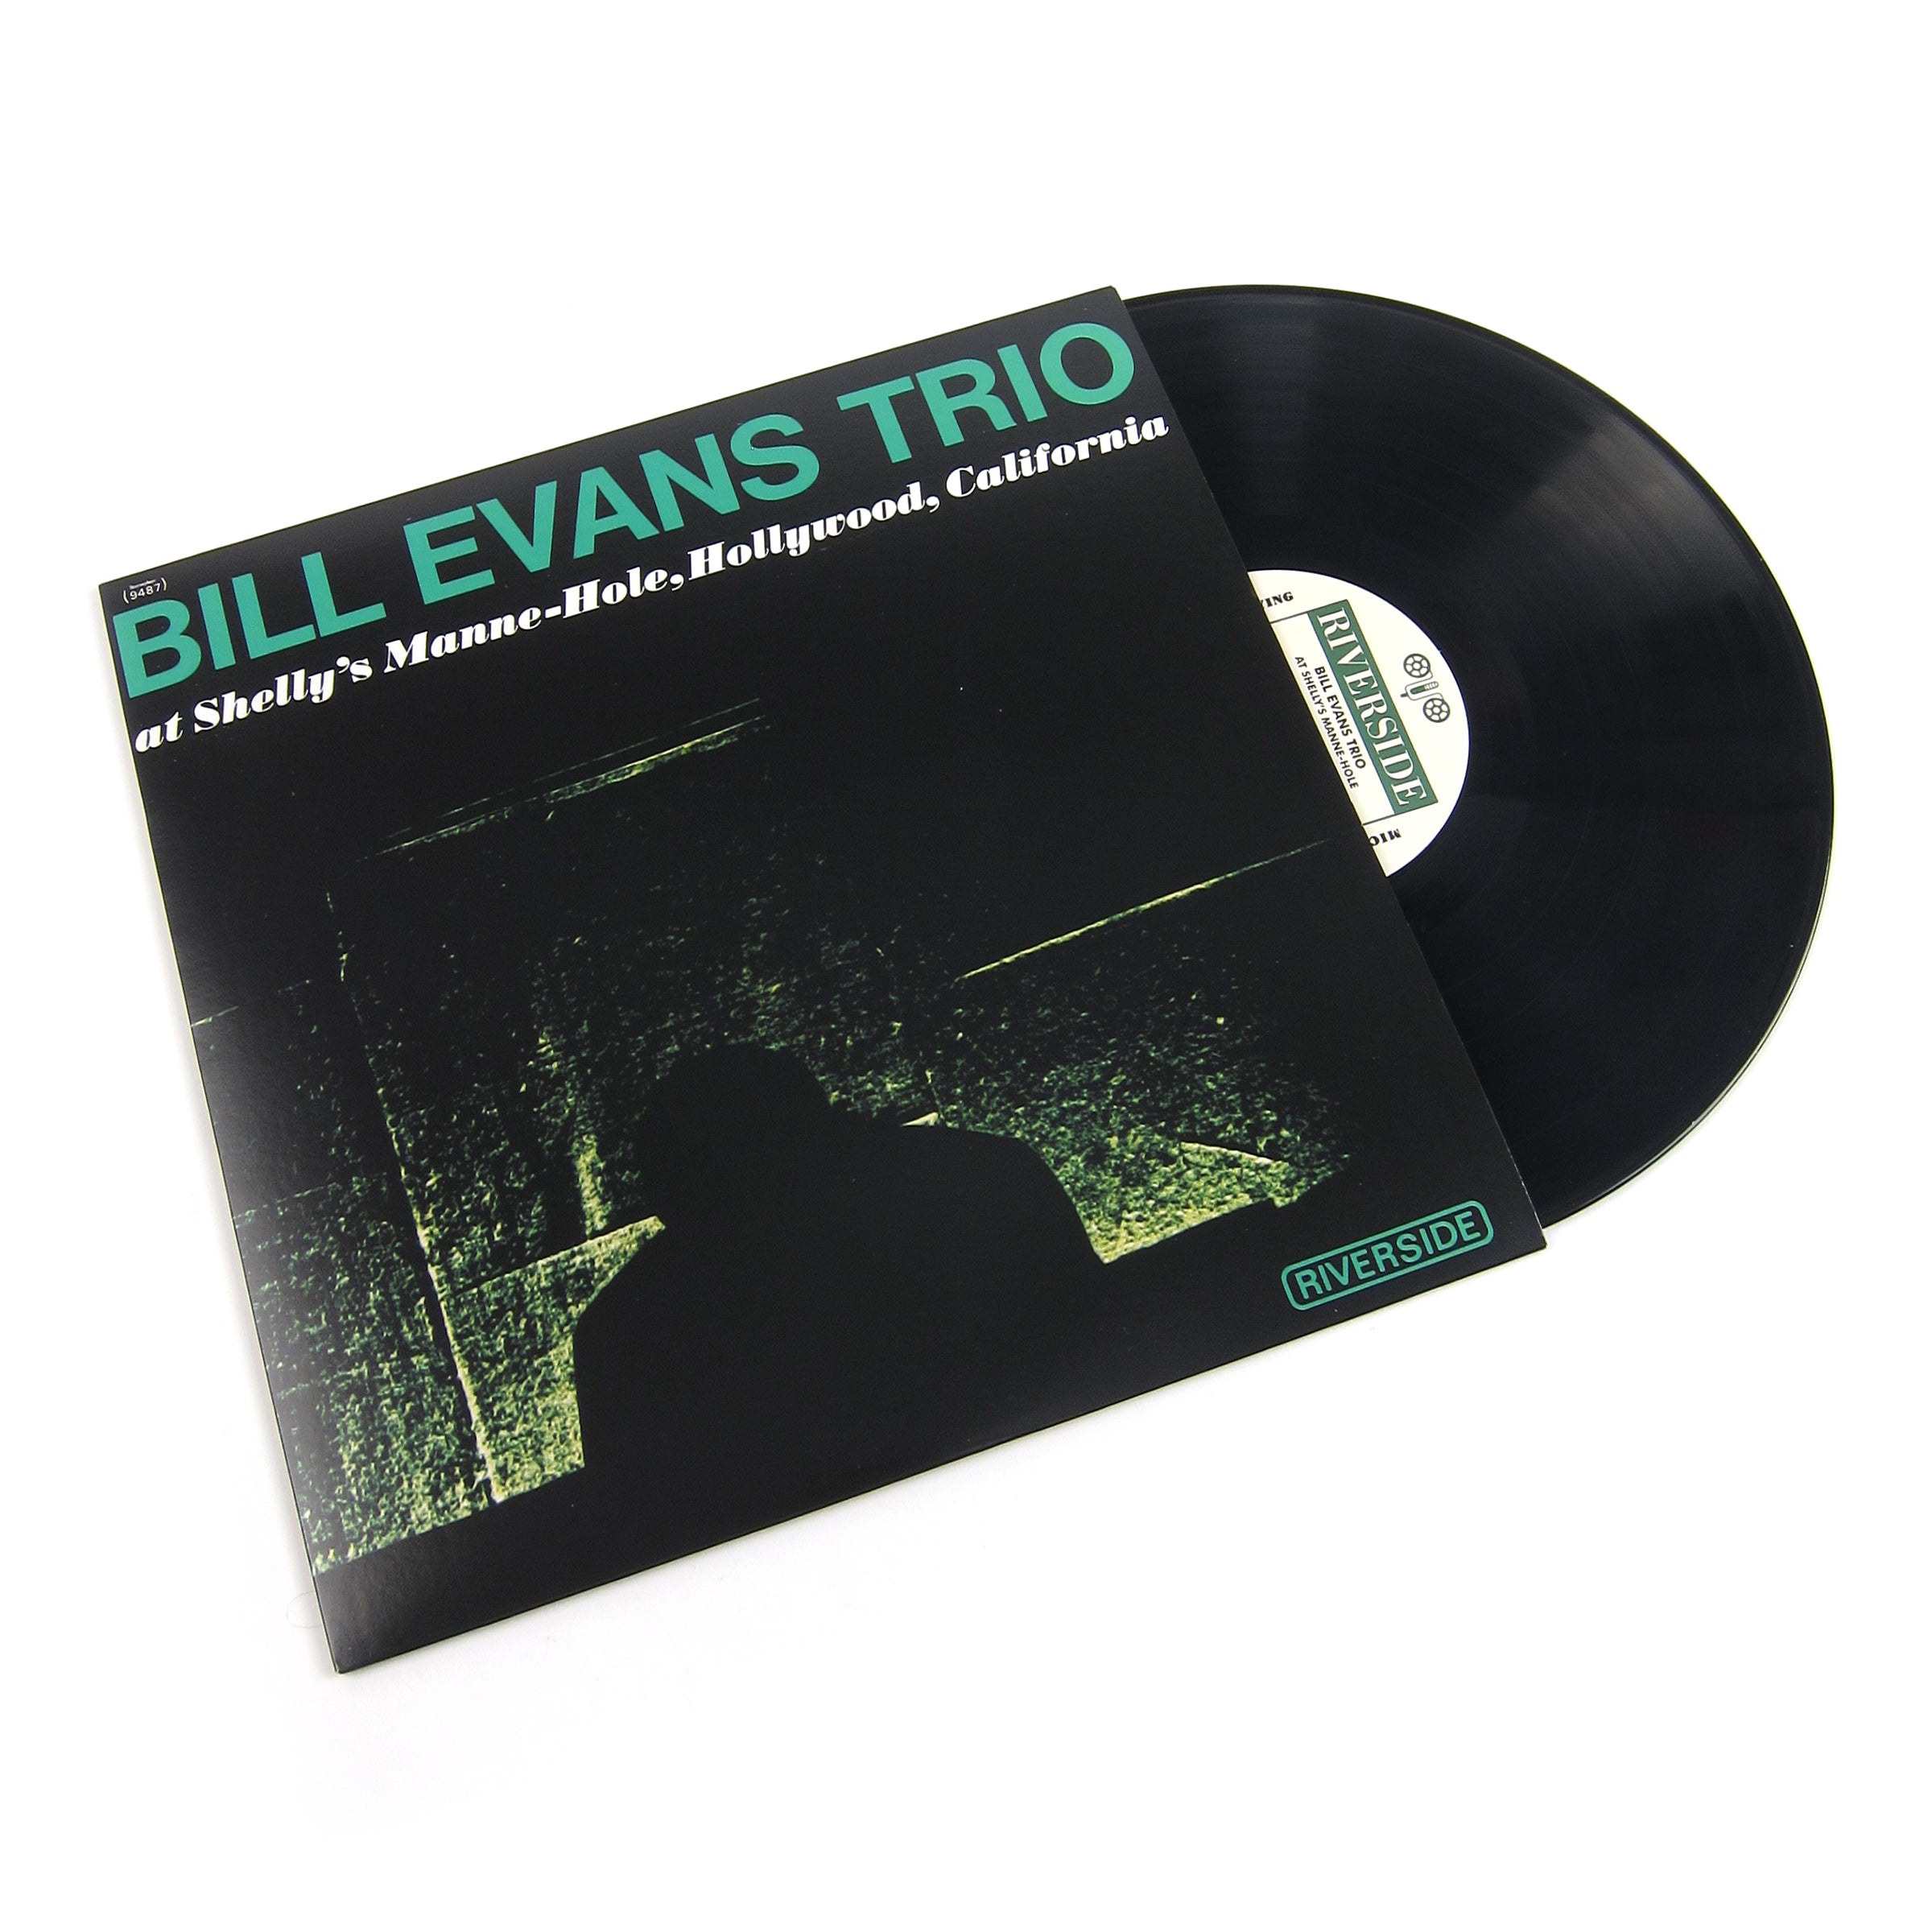 Bill Evans Trio: At Shelly's Manne-Hole, Hollywood, California Vinyl L ...